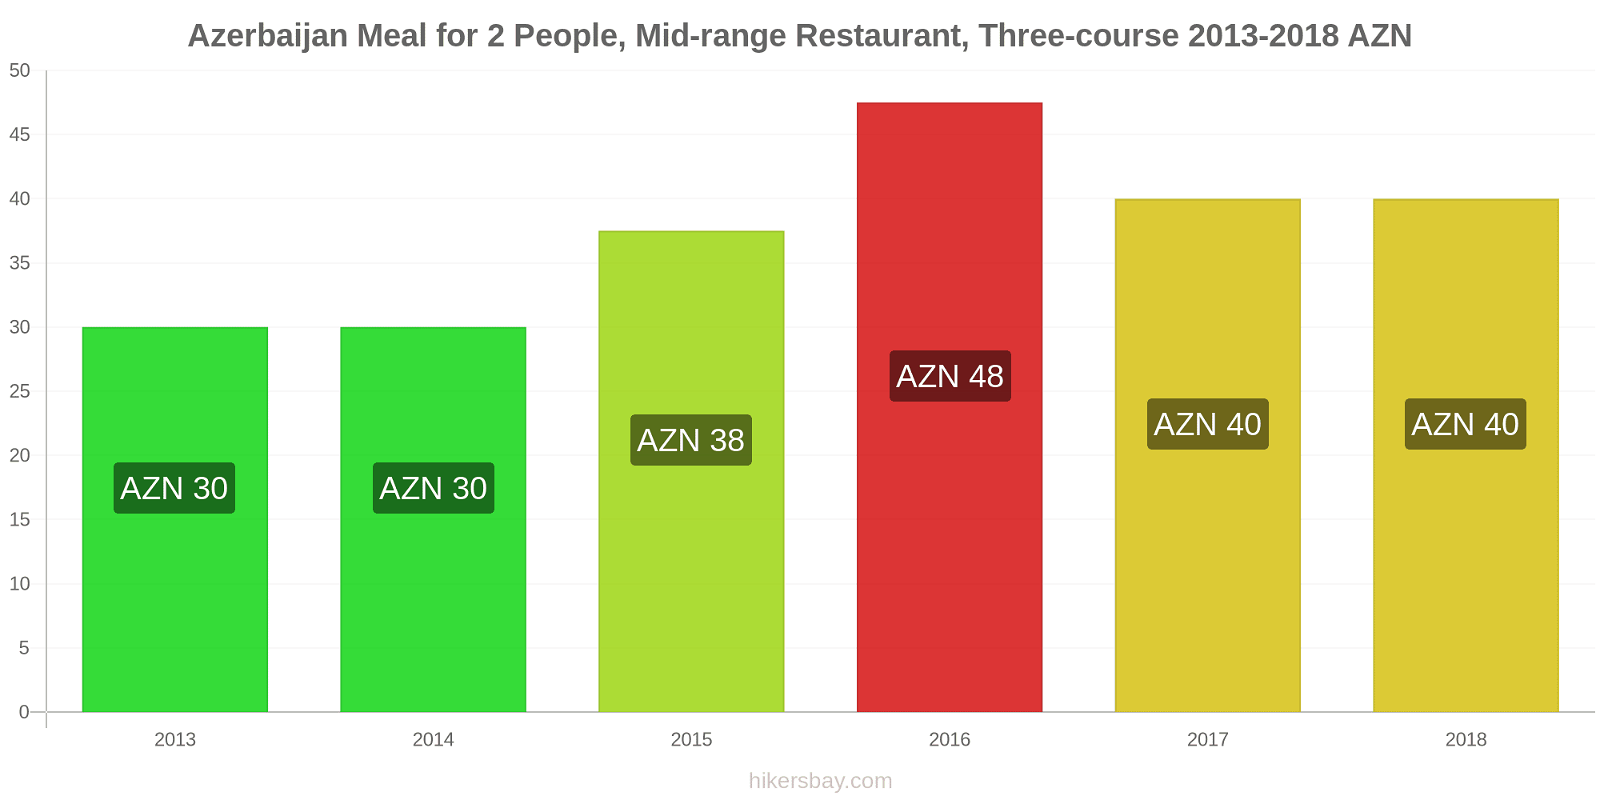 Azerbaijan price changes Meal for 2 People, Mid-range Restaurant, Three-course hikersbay.com